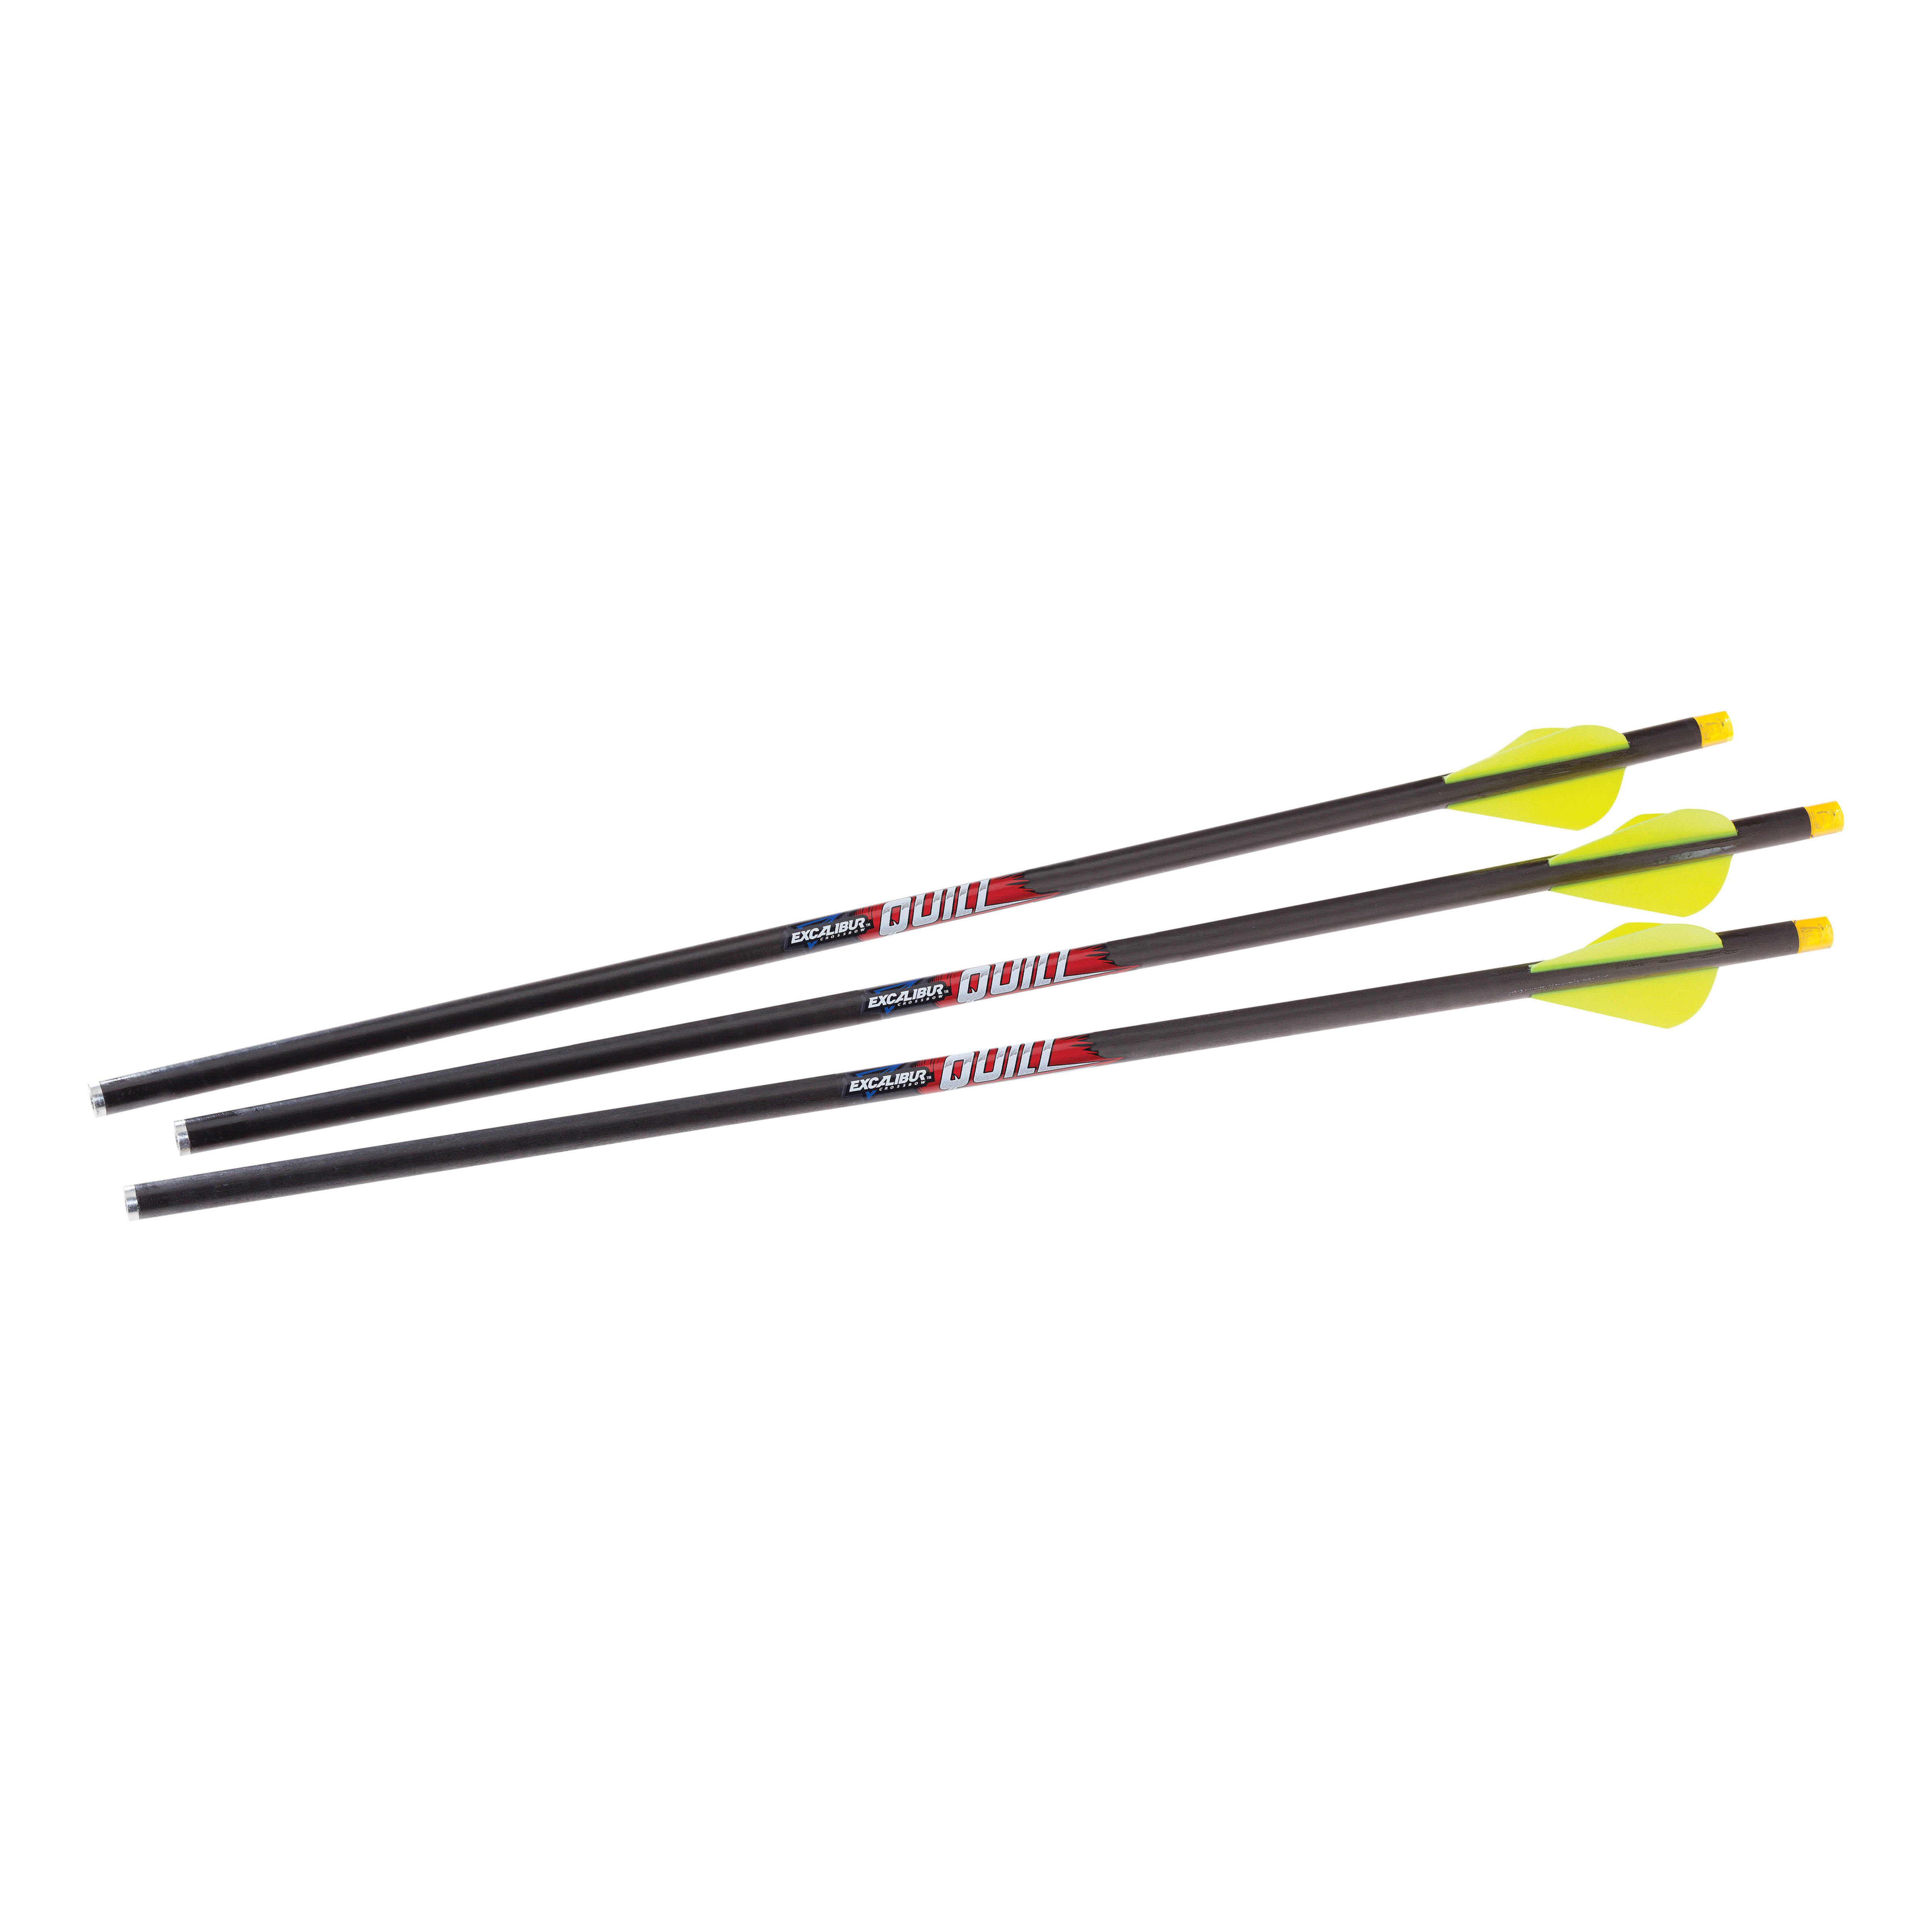 Excalibur® Quill Arrow Crossbow Bolt Six Pack